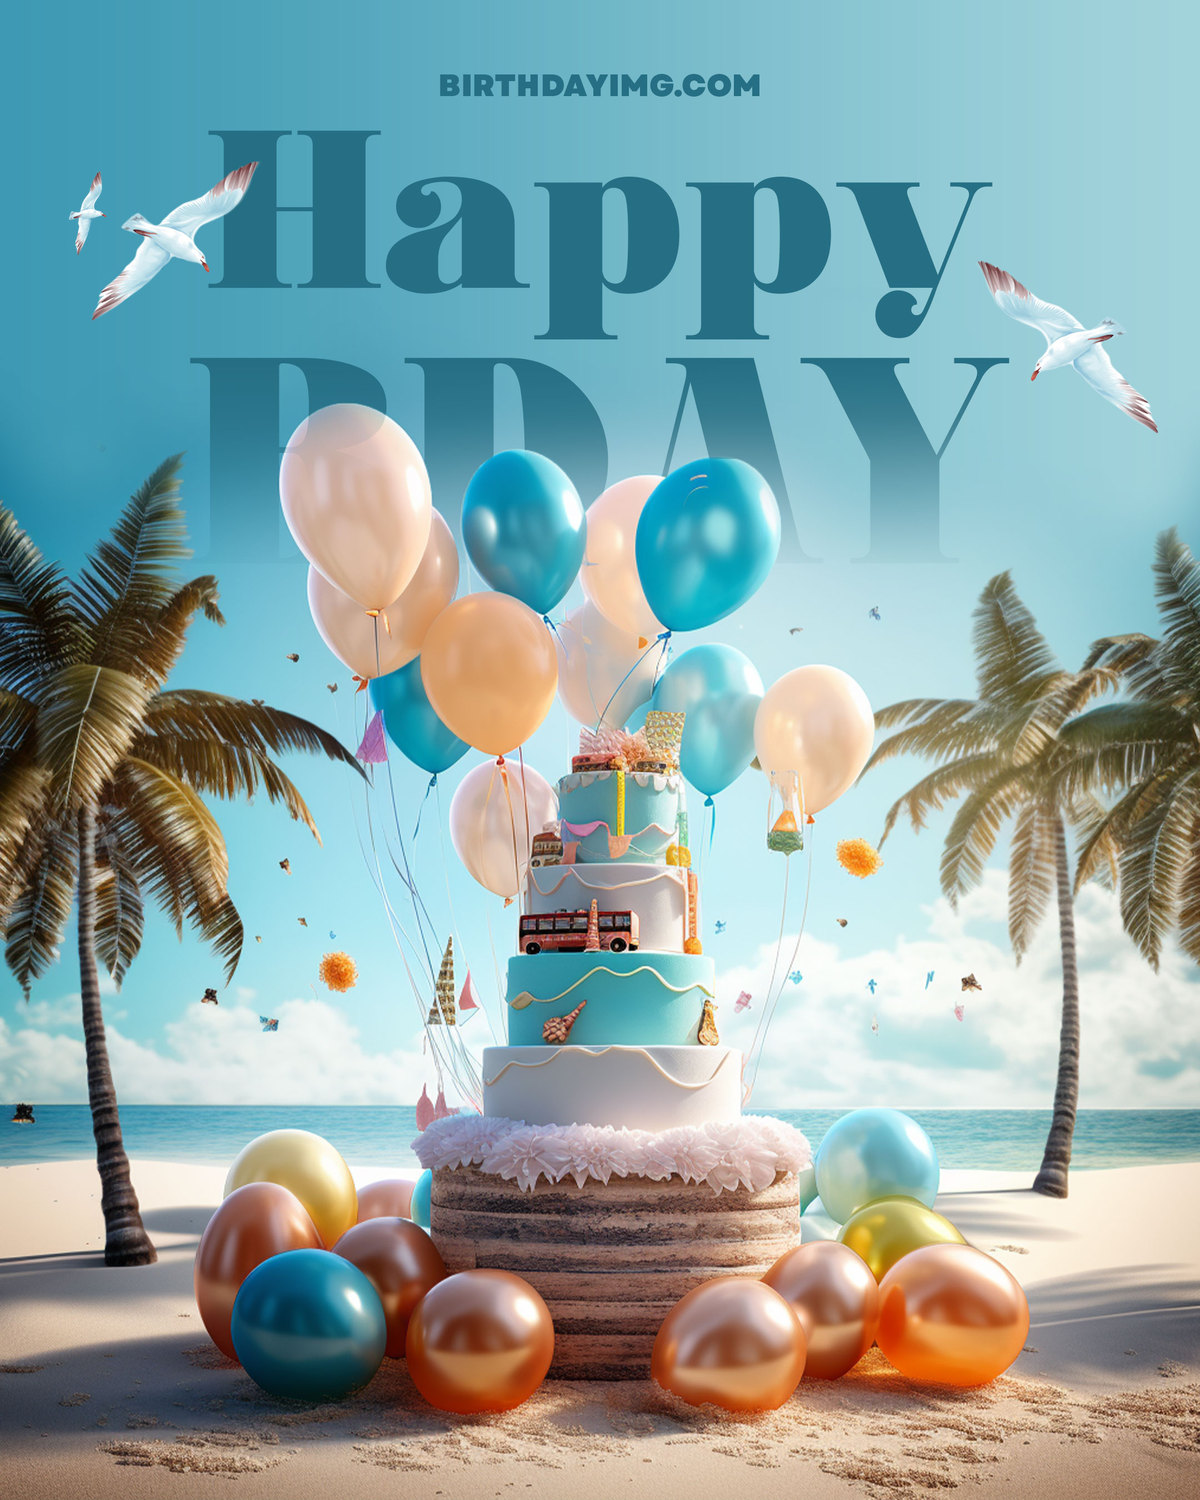 Free Happy Birthday at the Beach - birthdayimg.com